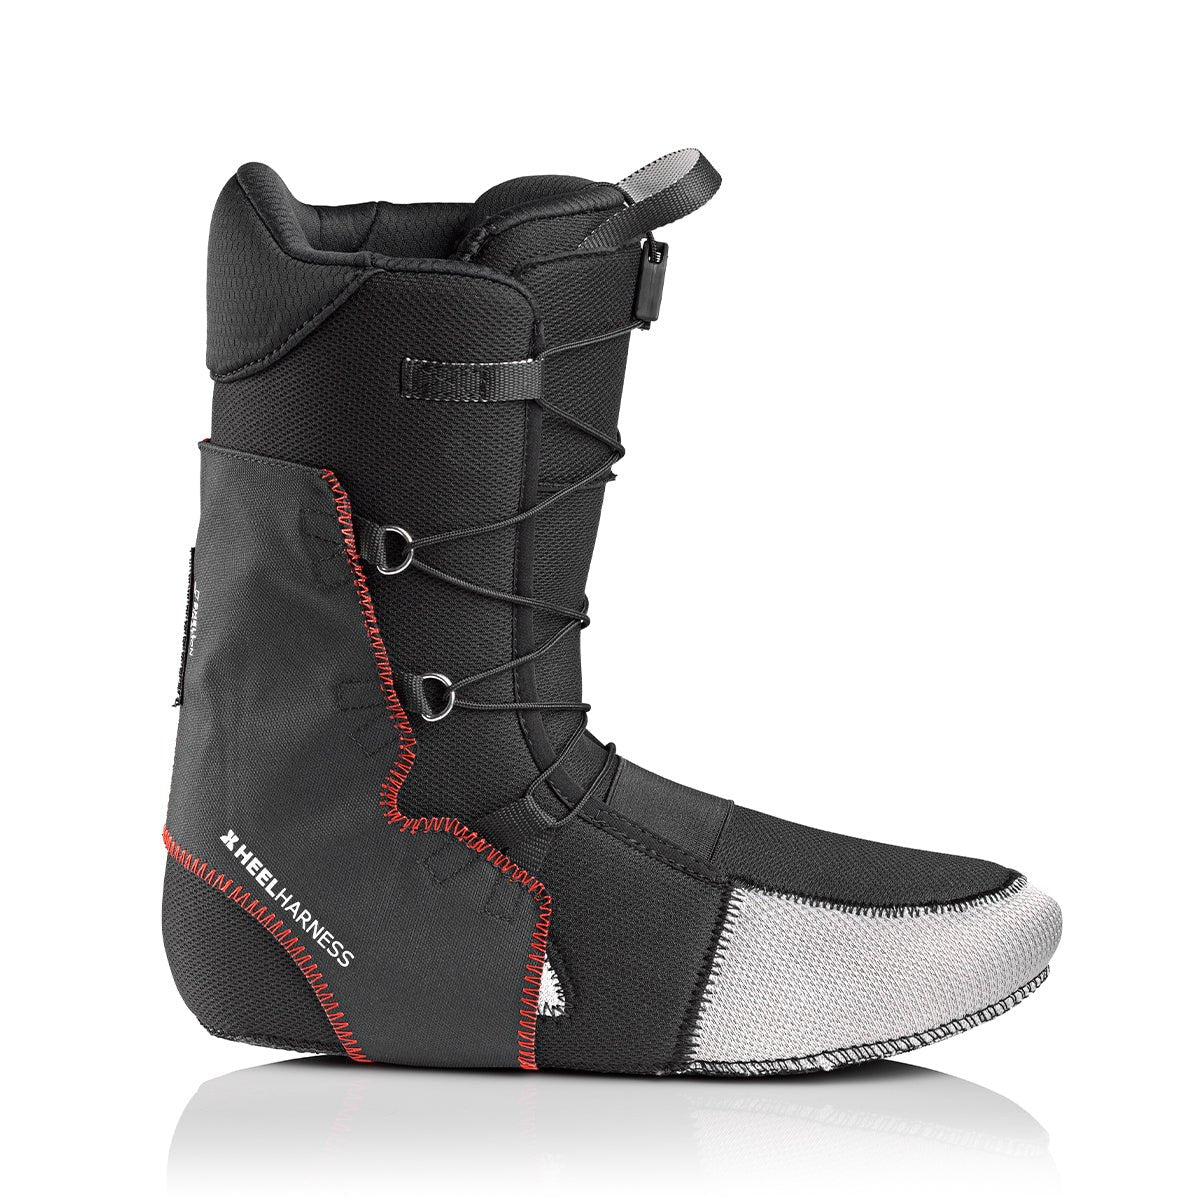 Deeluxe Team ID Lara Candy Snowboard Boots 2024 - FULLSEND SKI AND OUTDOOR